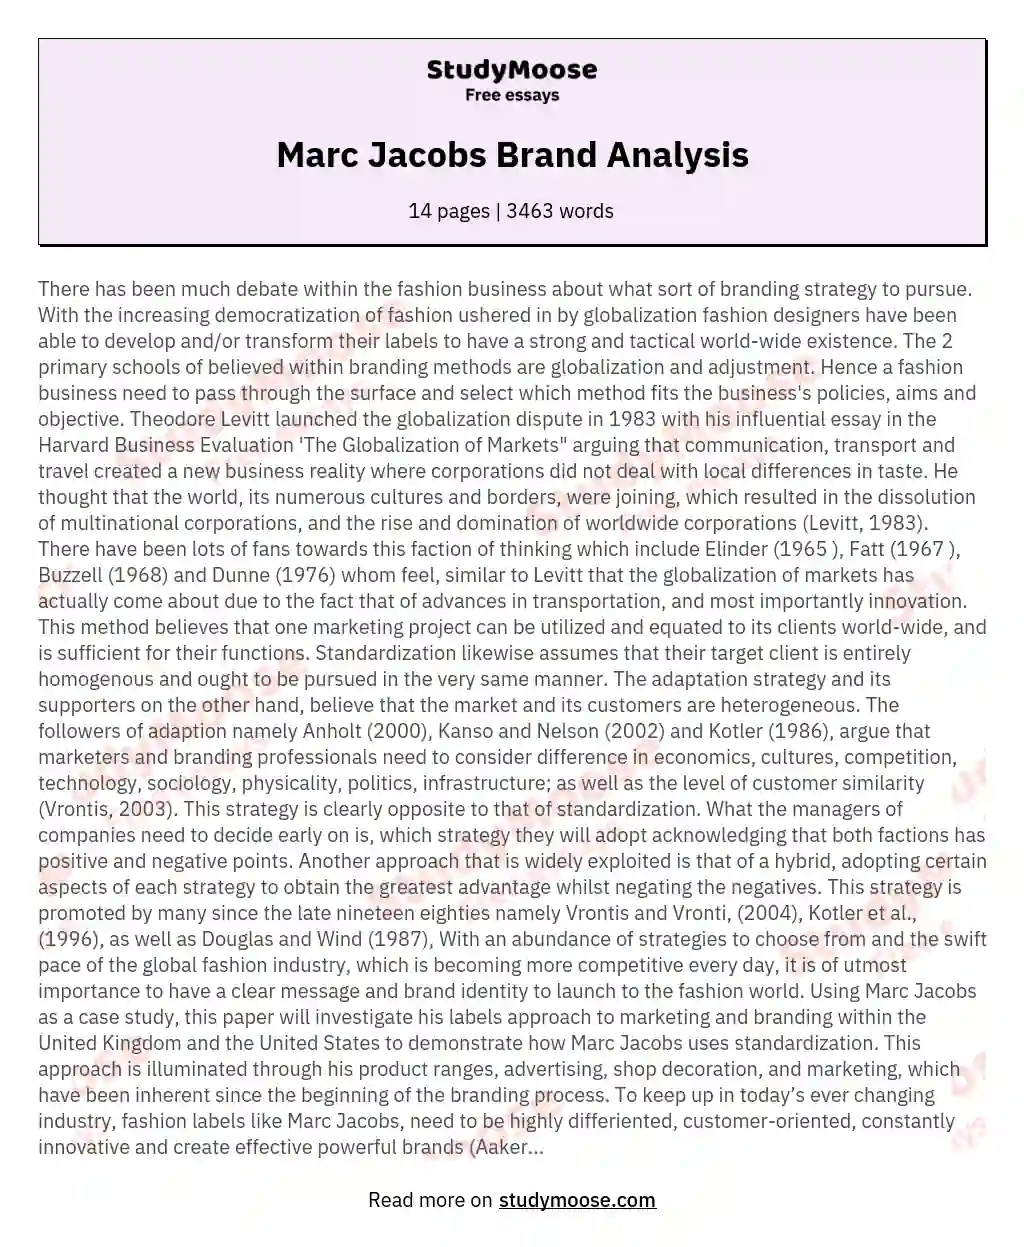 Marc Jacobs Brand Analysis essay